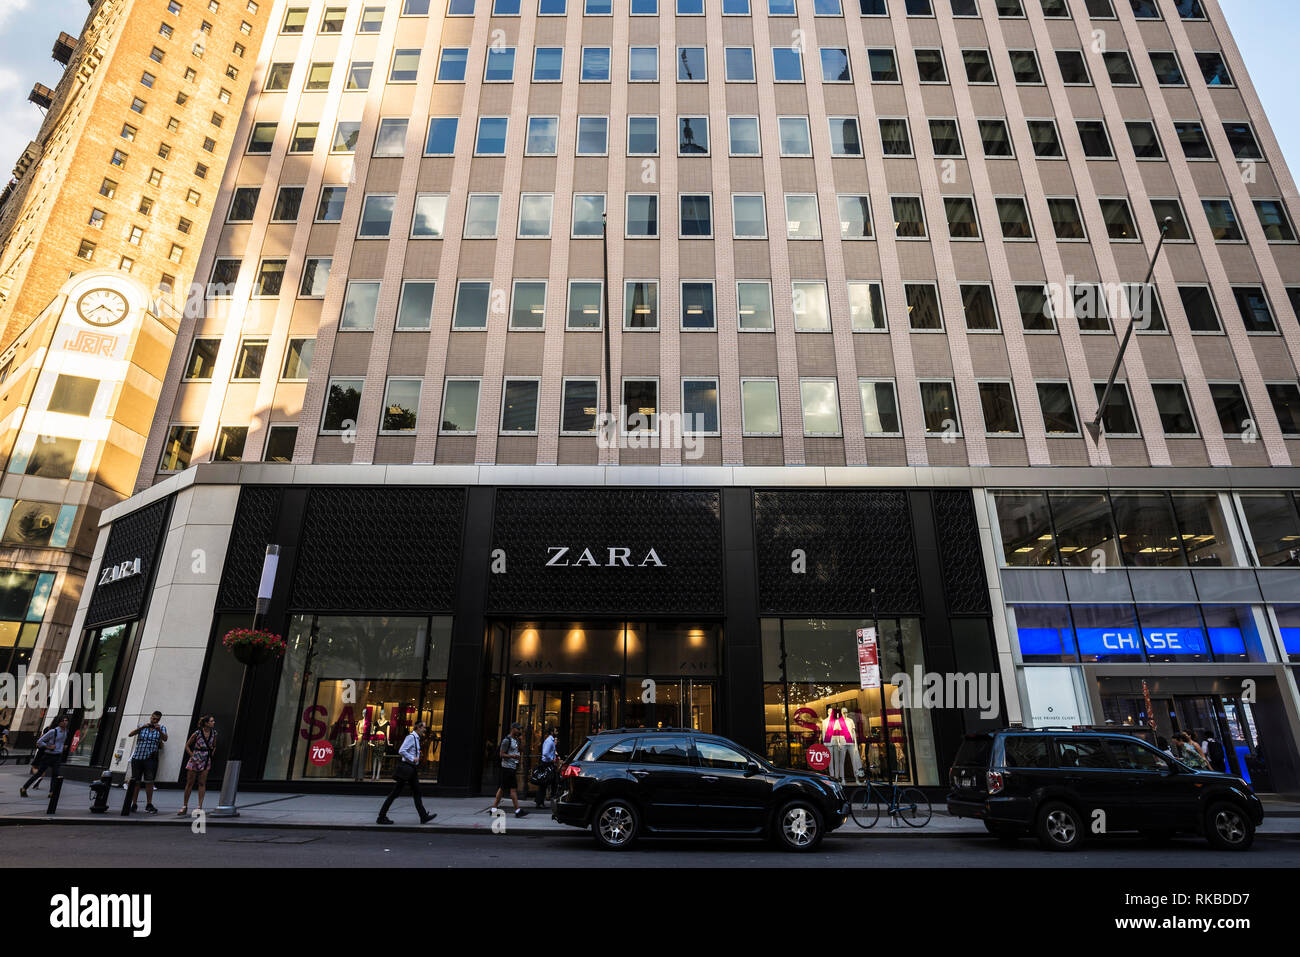 New York City, USA - July 27, 2018: Zara clothing store in Fulton Street with people around in Manhattan, New York City, USA Stock Photo